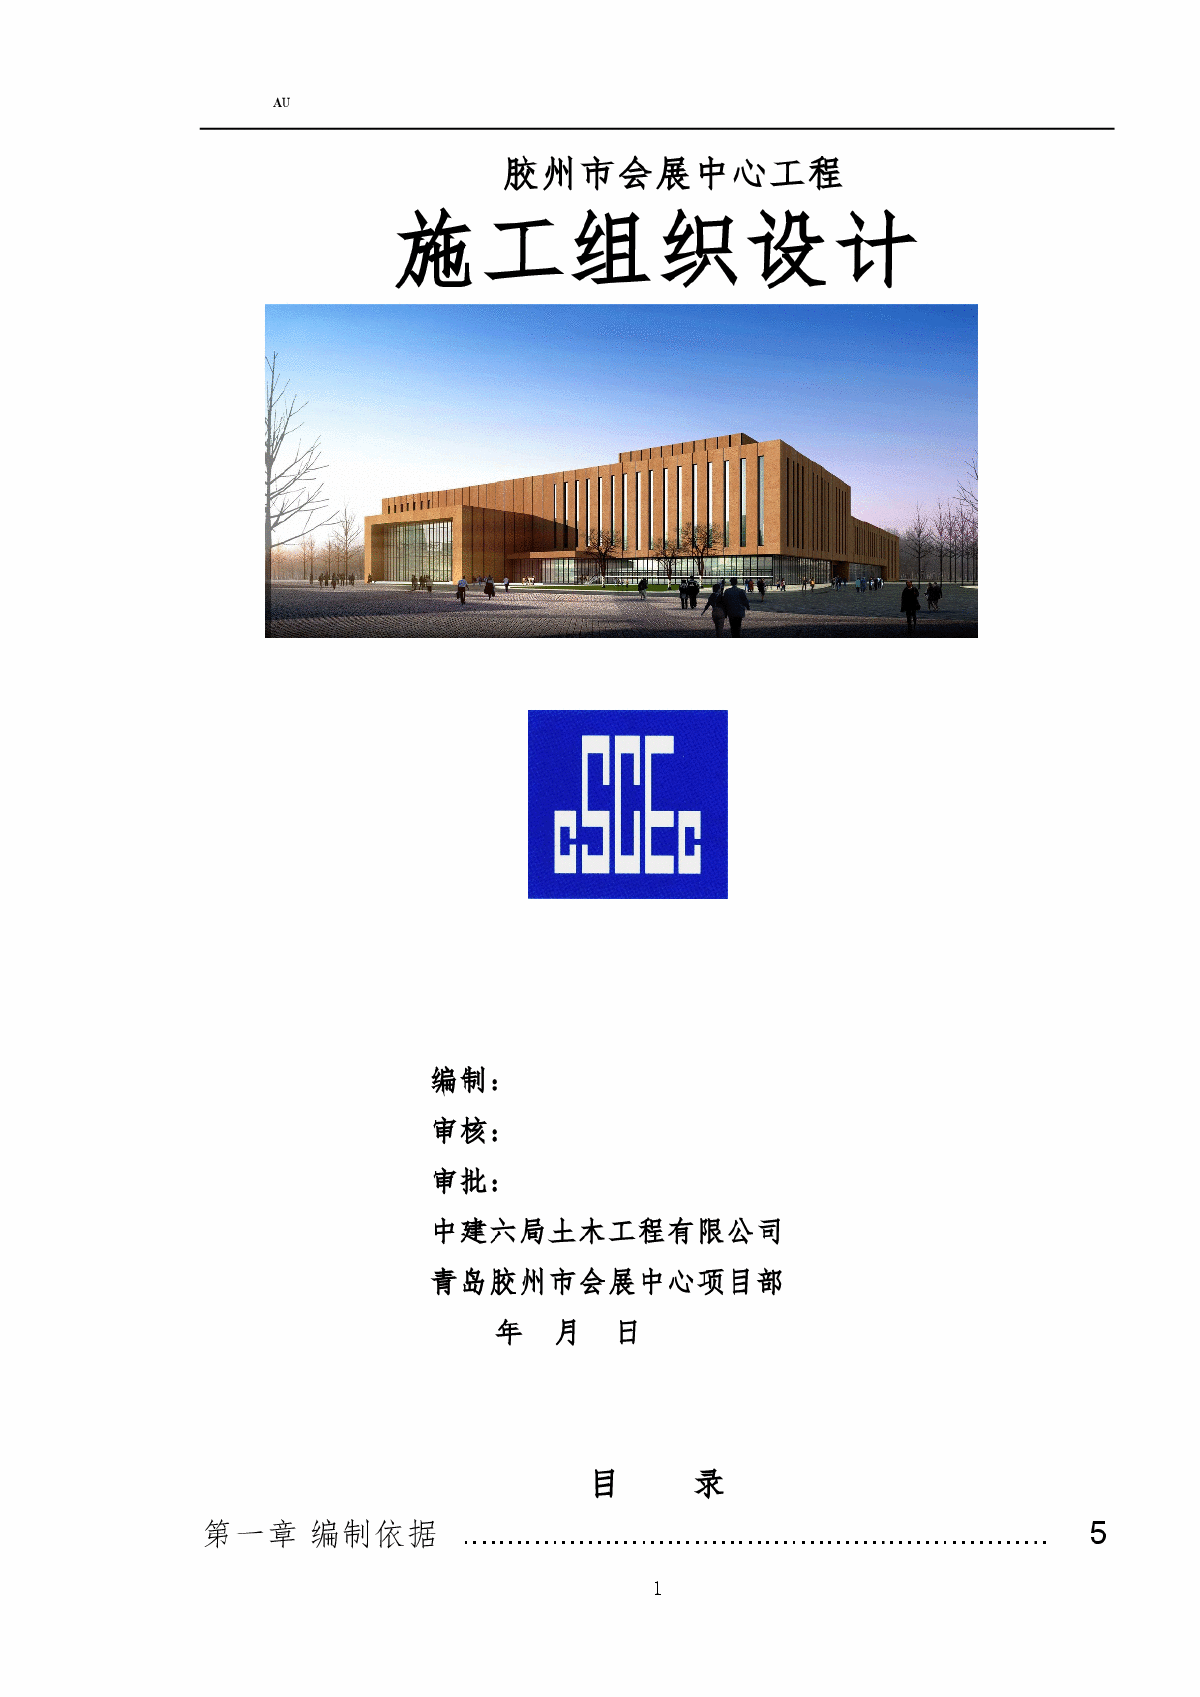  Exhibition Center Construction Organization Design Company - Figure 1